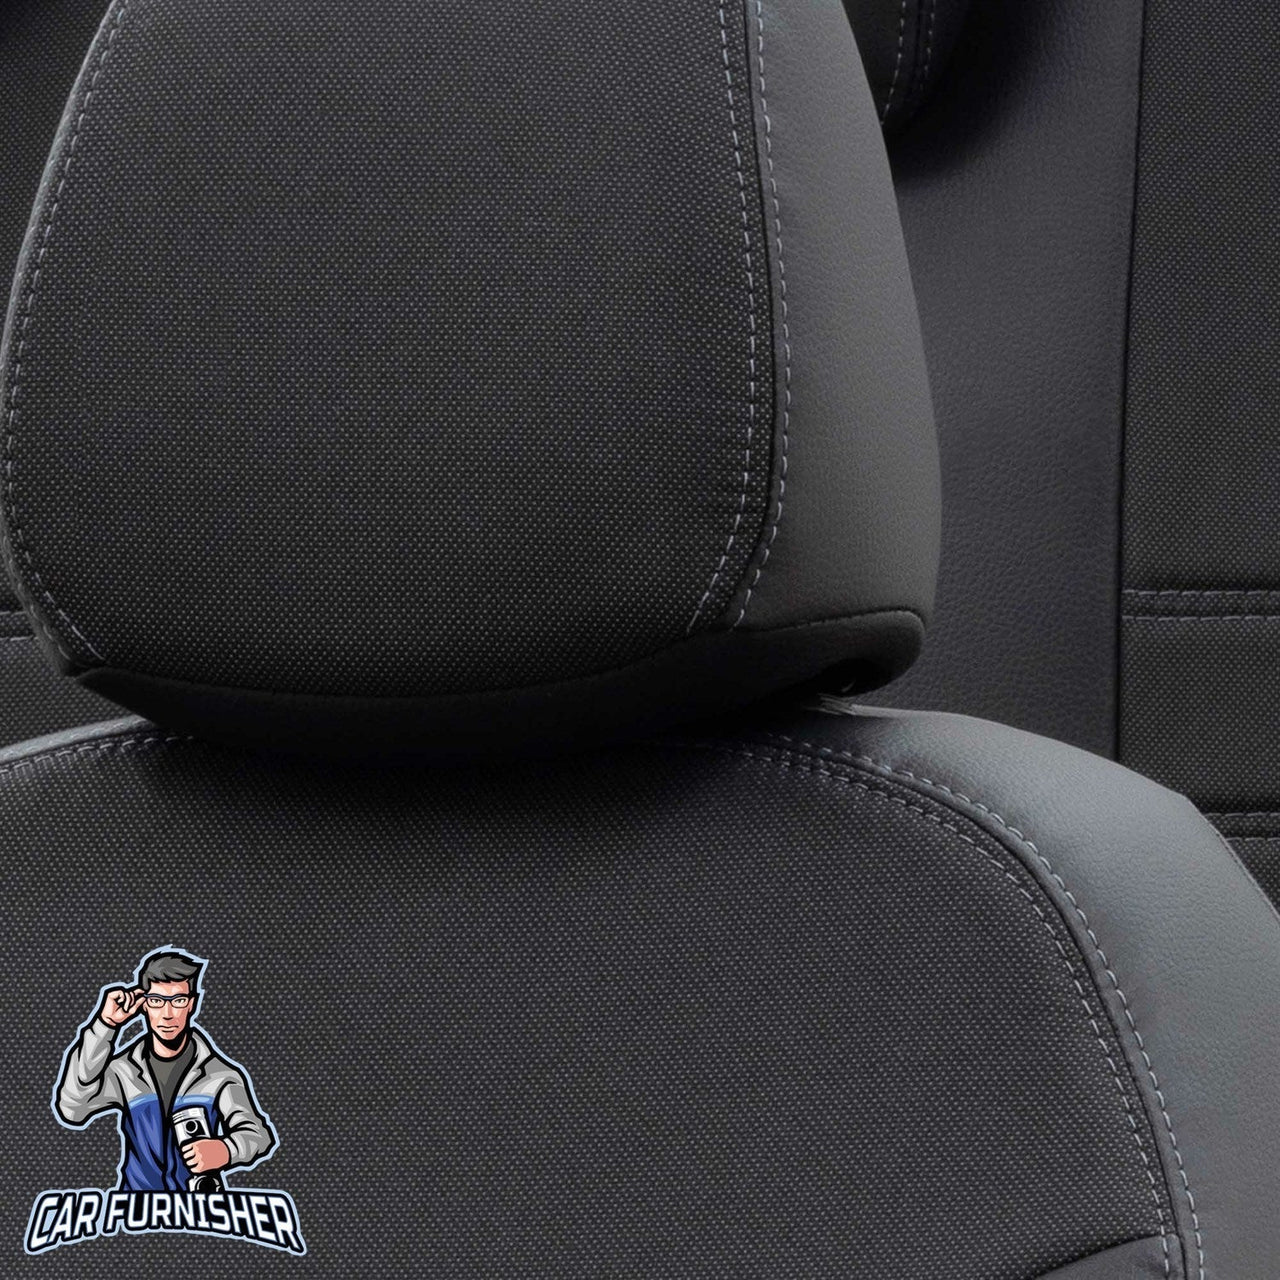 Chevrolet Spark Seat Covers Paris Leather & Jacquard Design Black Leather & Jacquard Fabric